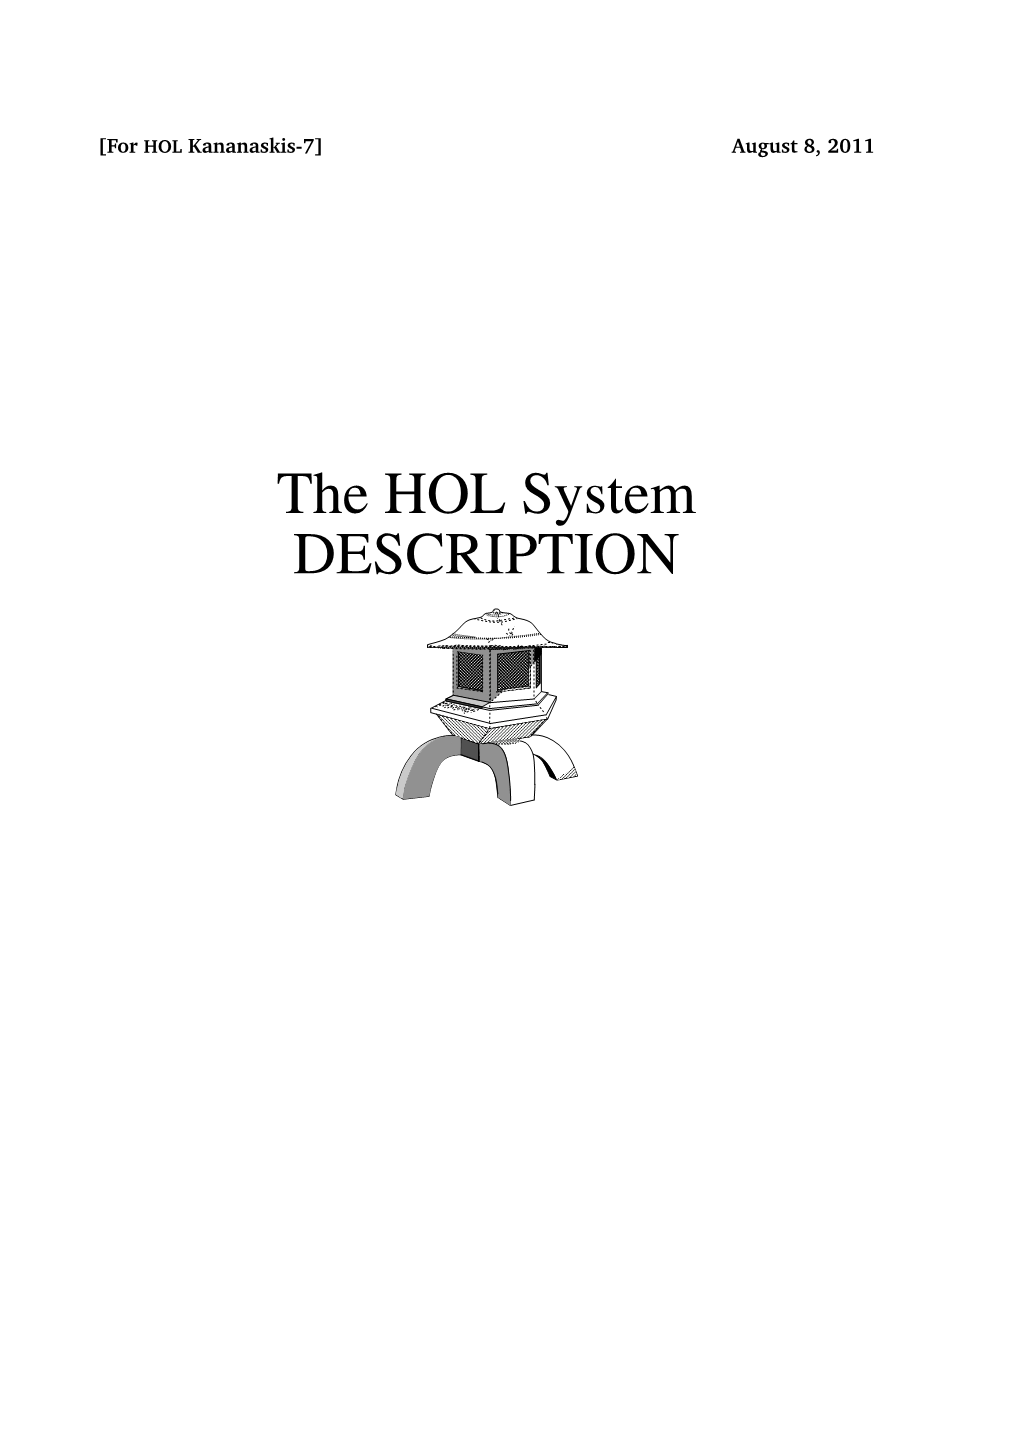 The HOL System DESCRIPTION